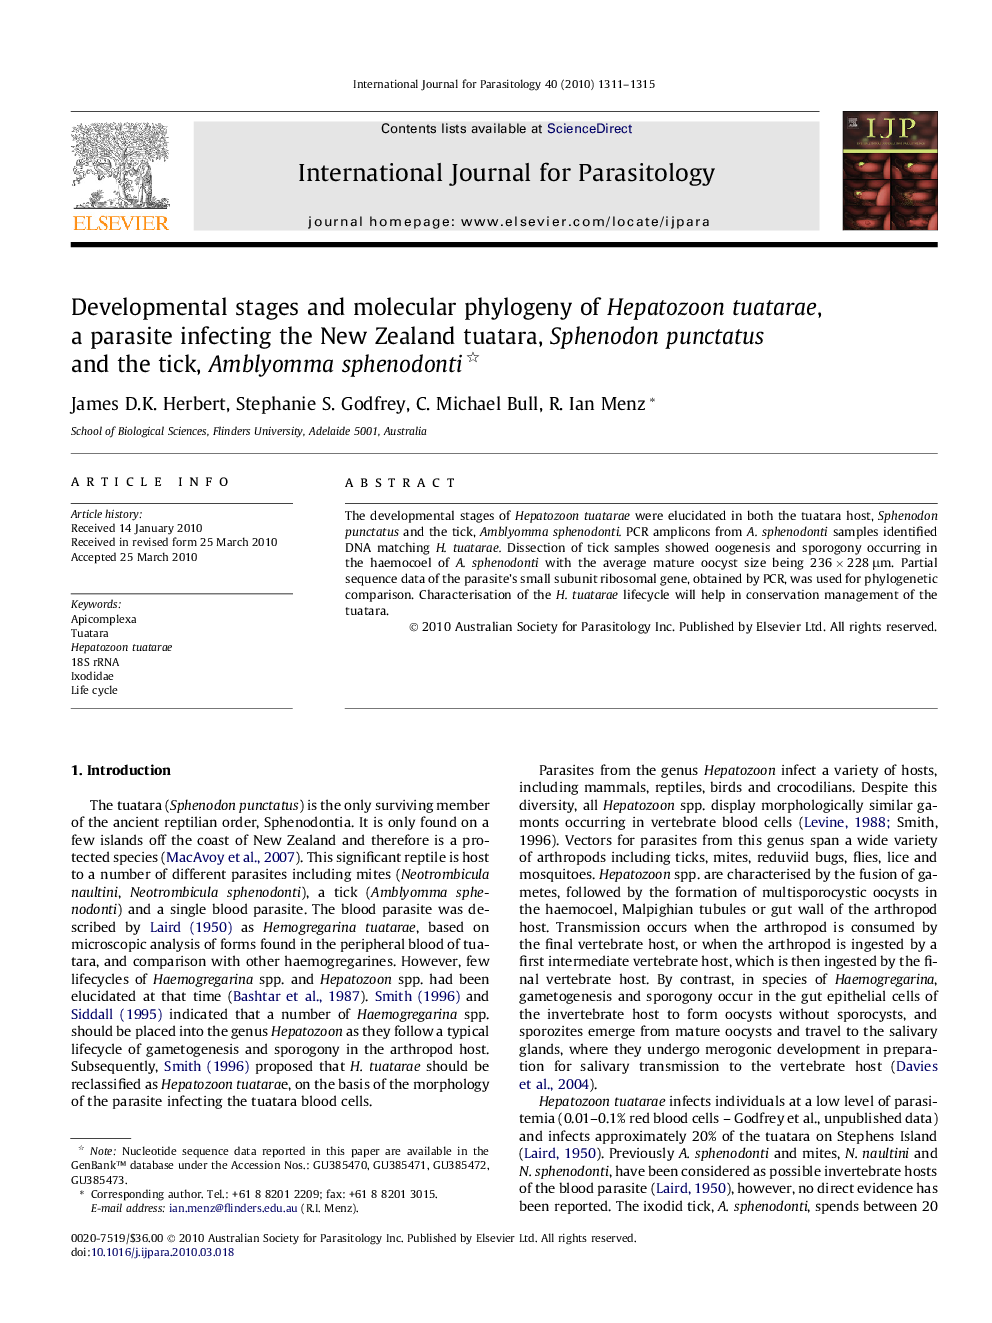 Developmental stages and molecular phylogeny of Hepatozoon tuatarae, a parasite infecting the New Zealand tuatara, Sphenodon punctatus and the tick, Amblyomma sphenodonti 